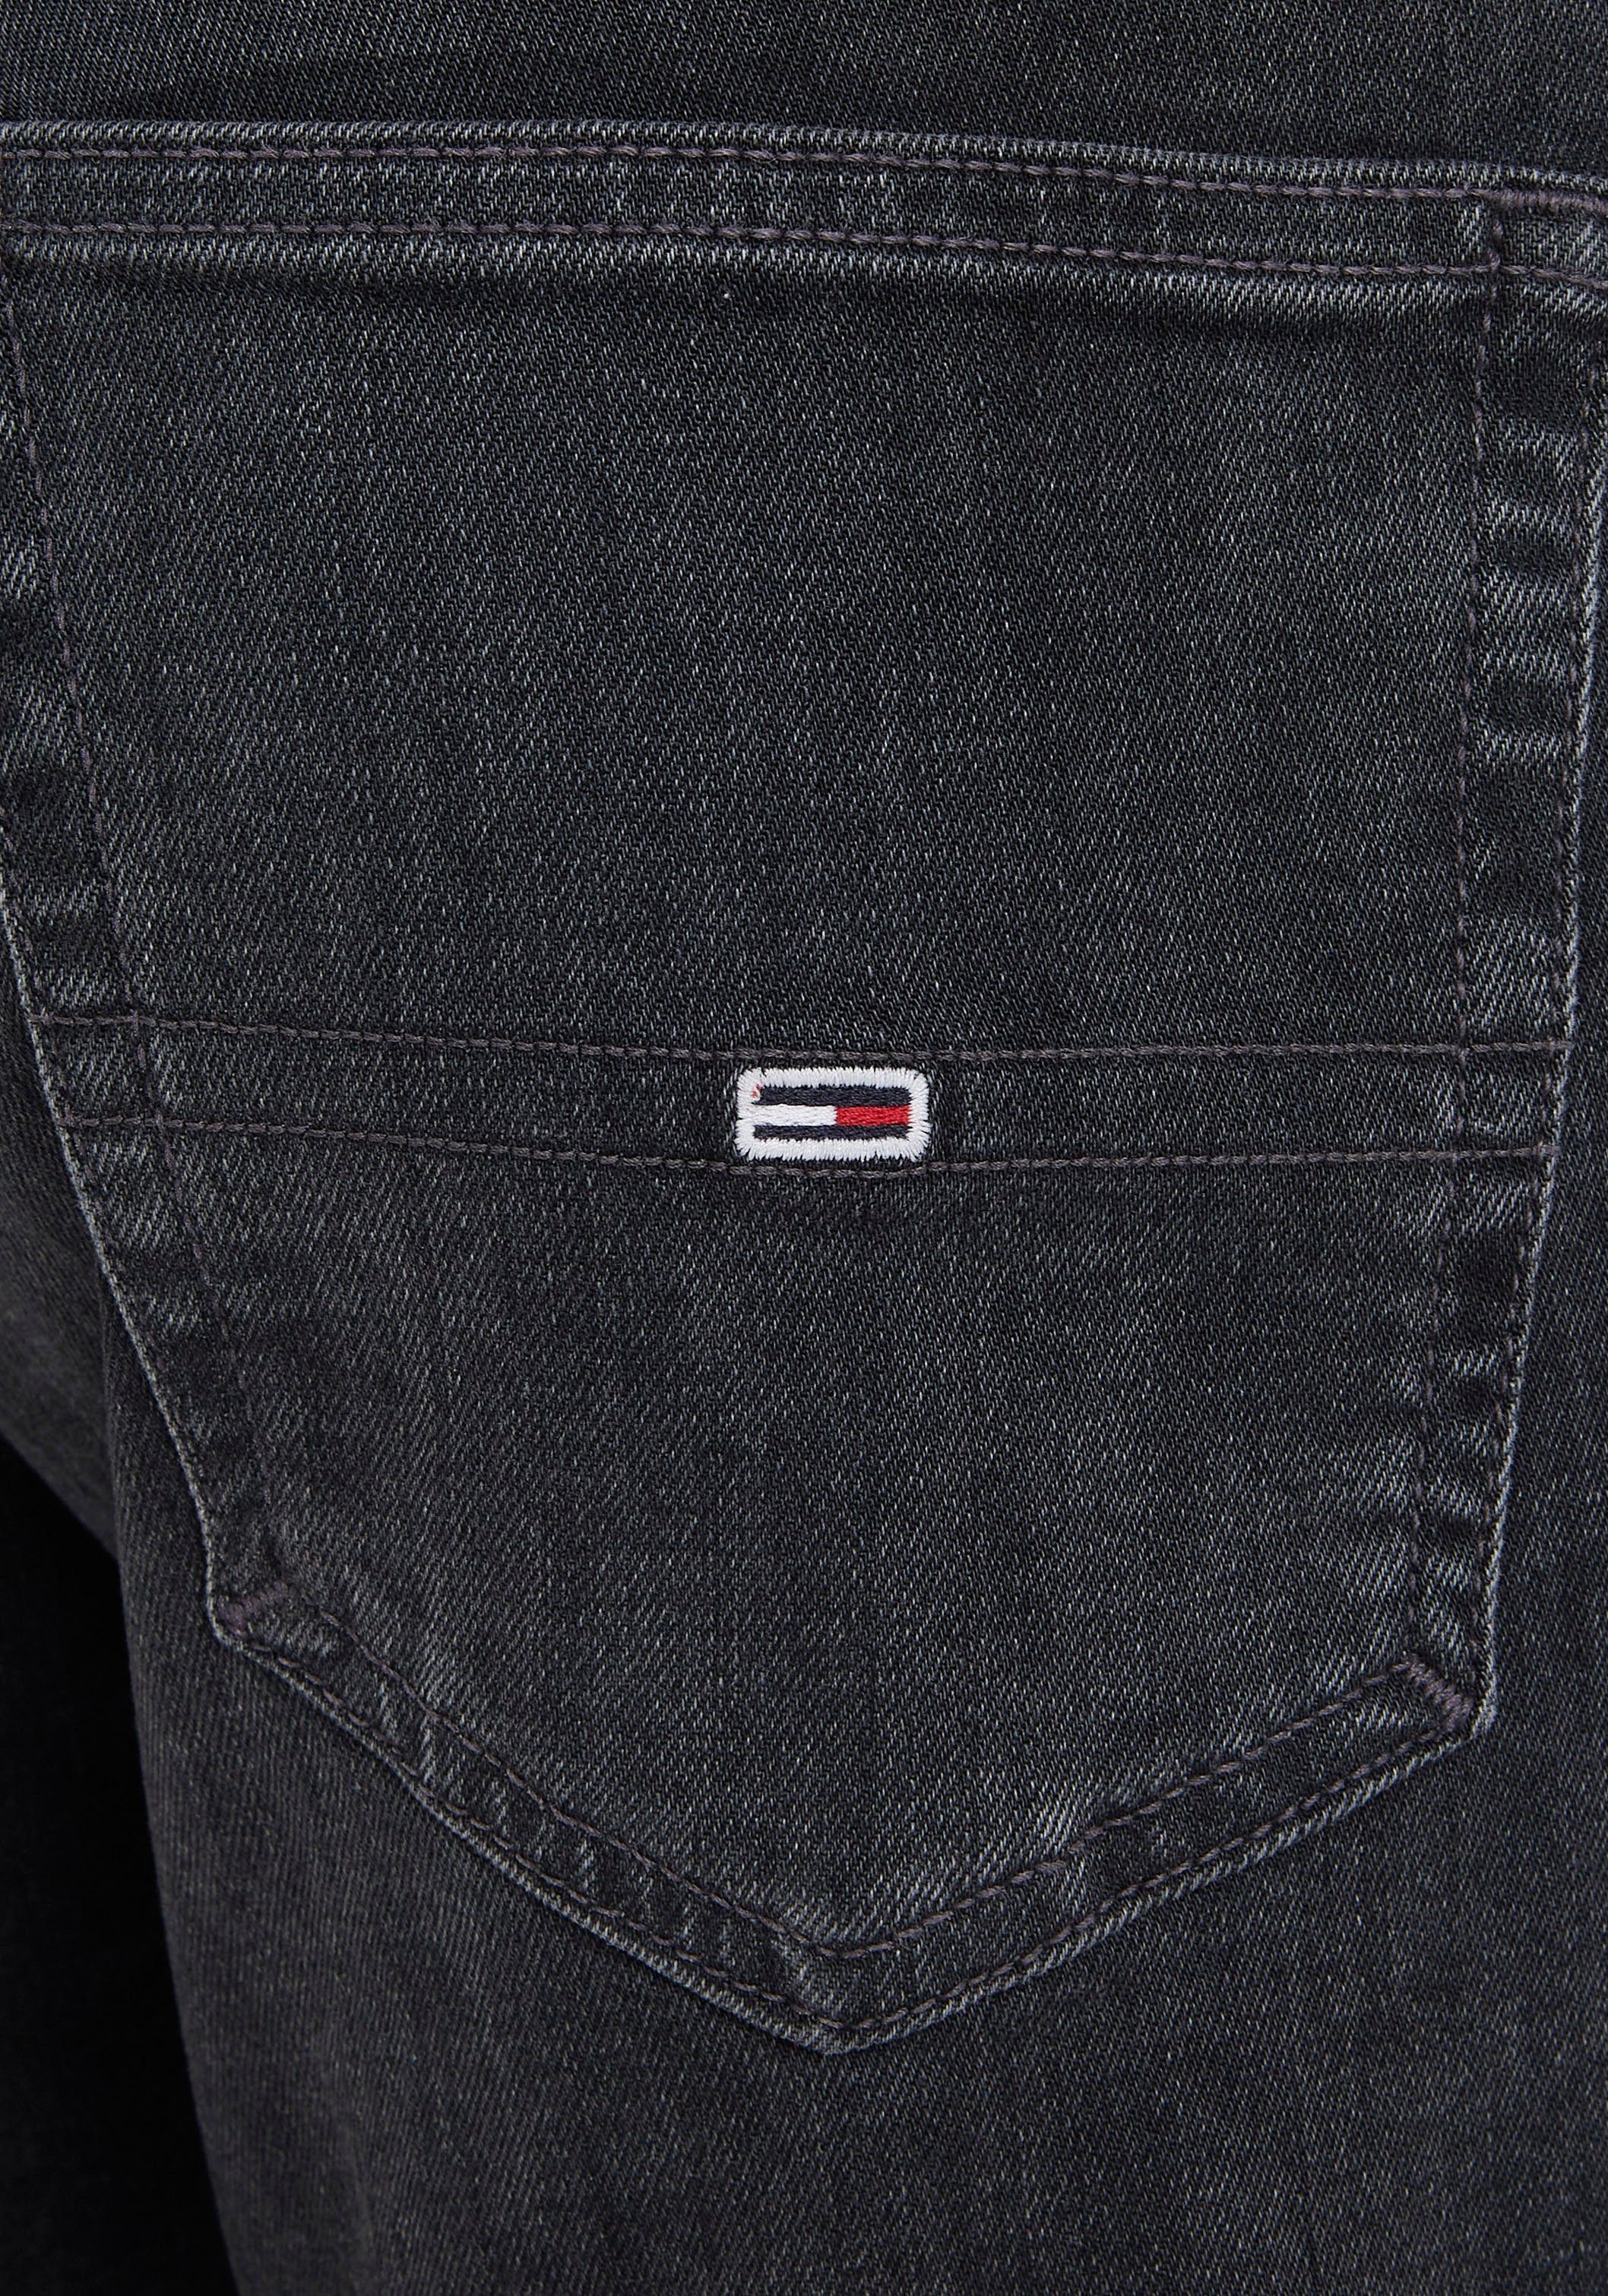 Jeans TPRD mit SLIM AUSTIN Tommy Lederbadge black Slim-fit-Jeans denim